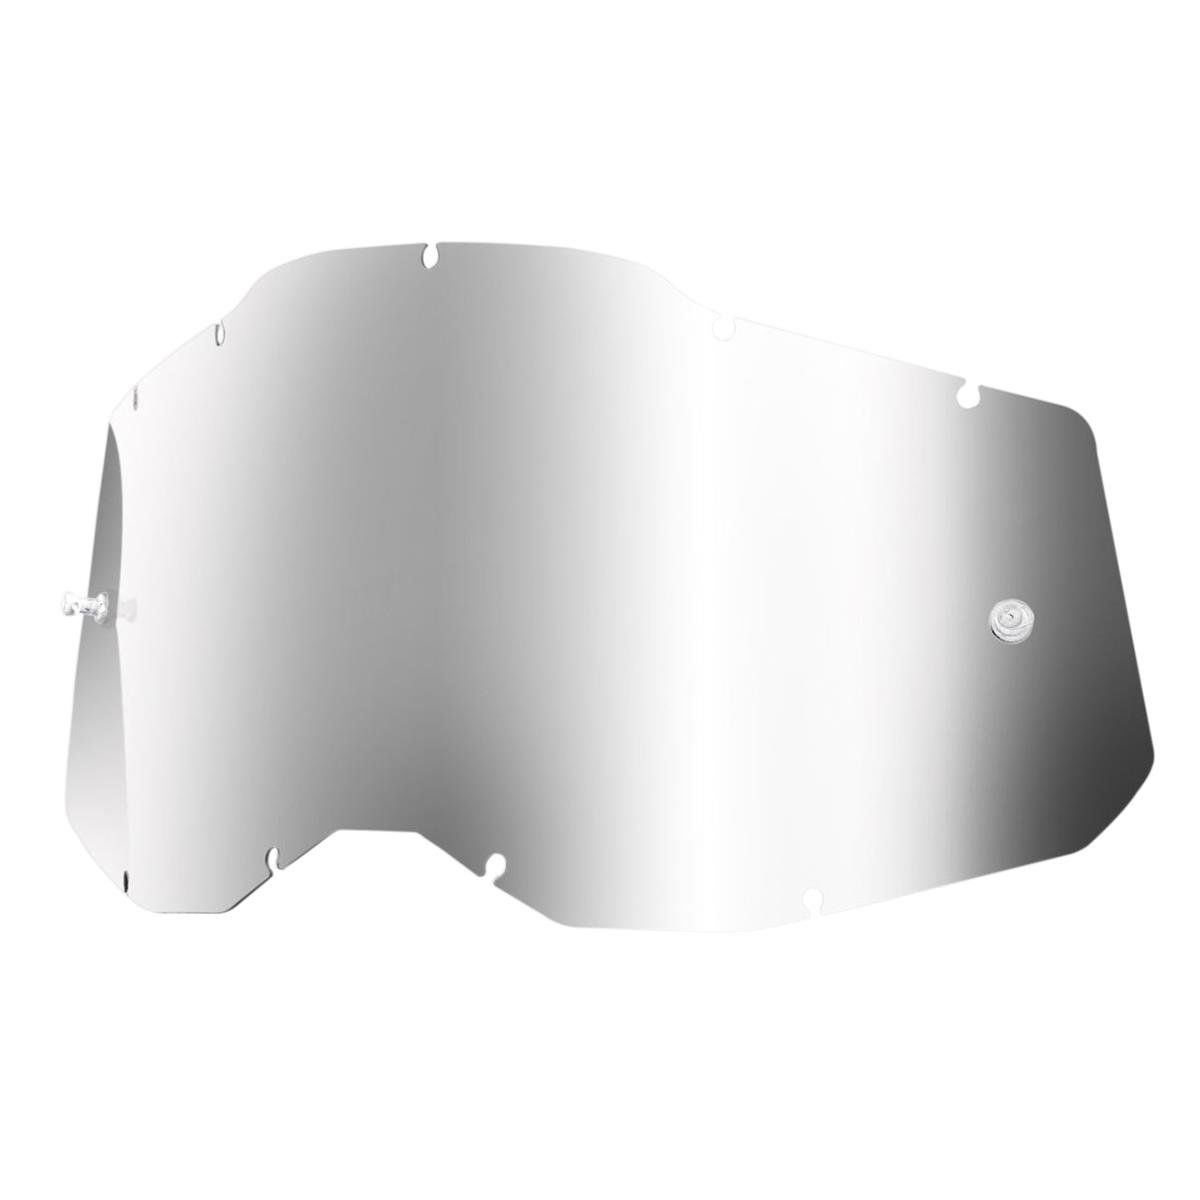 100% Replacement Lens Racecraft Gen. 2 / Accuri Gen. 2 / Strata Gen. 2 Silver Mirror - Antifog